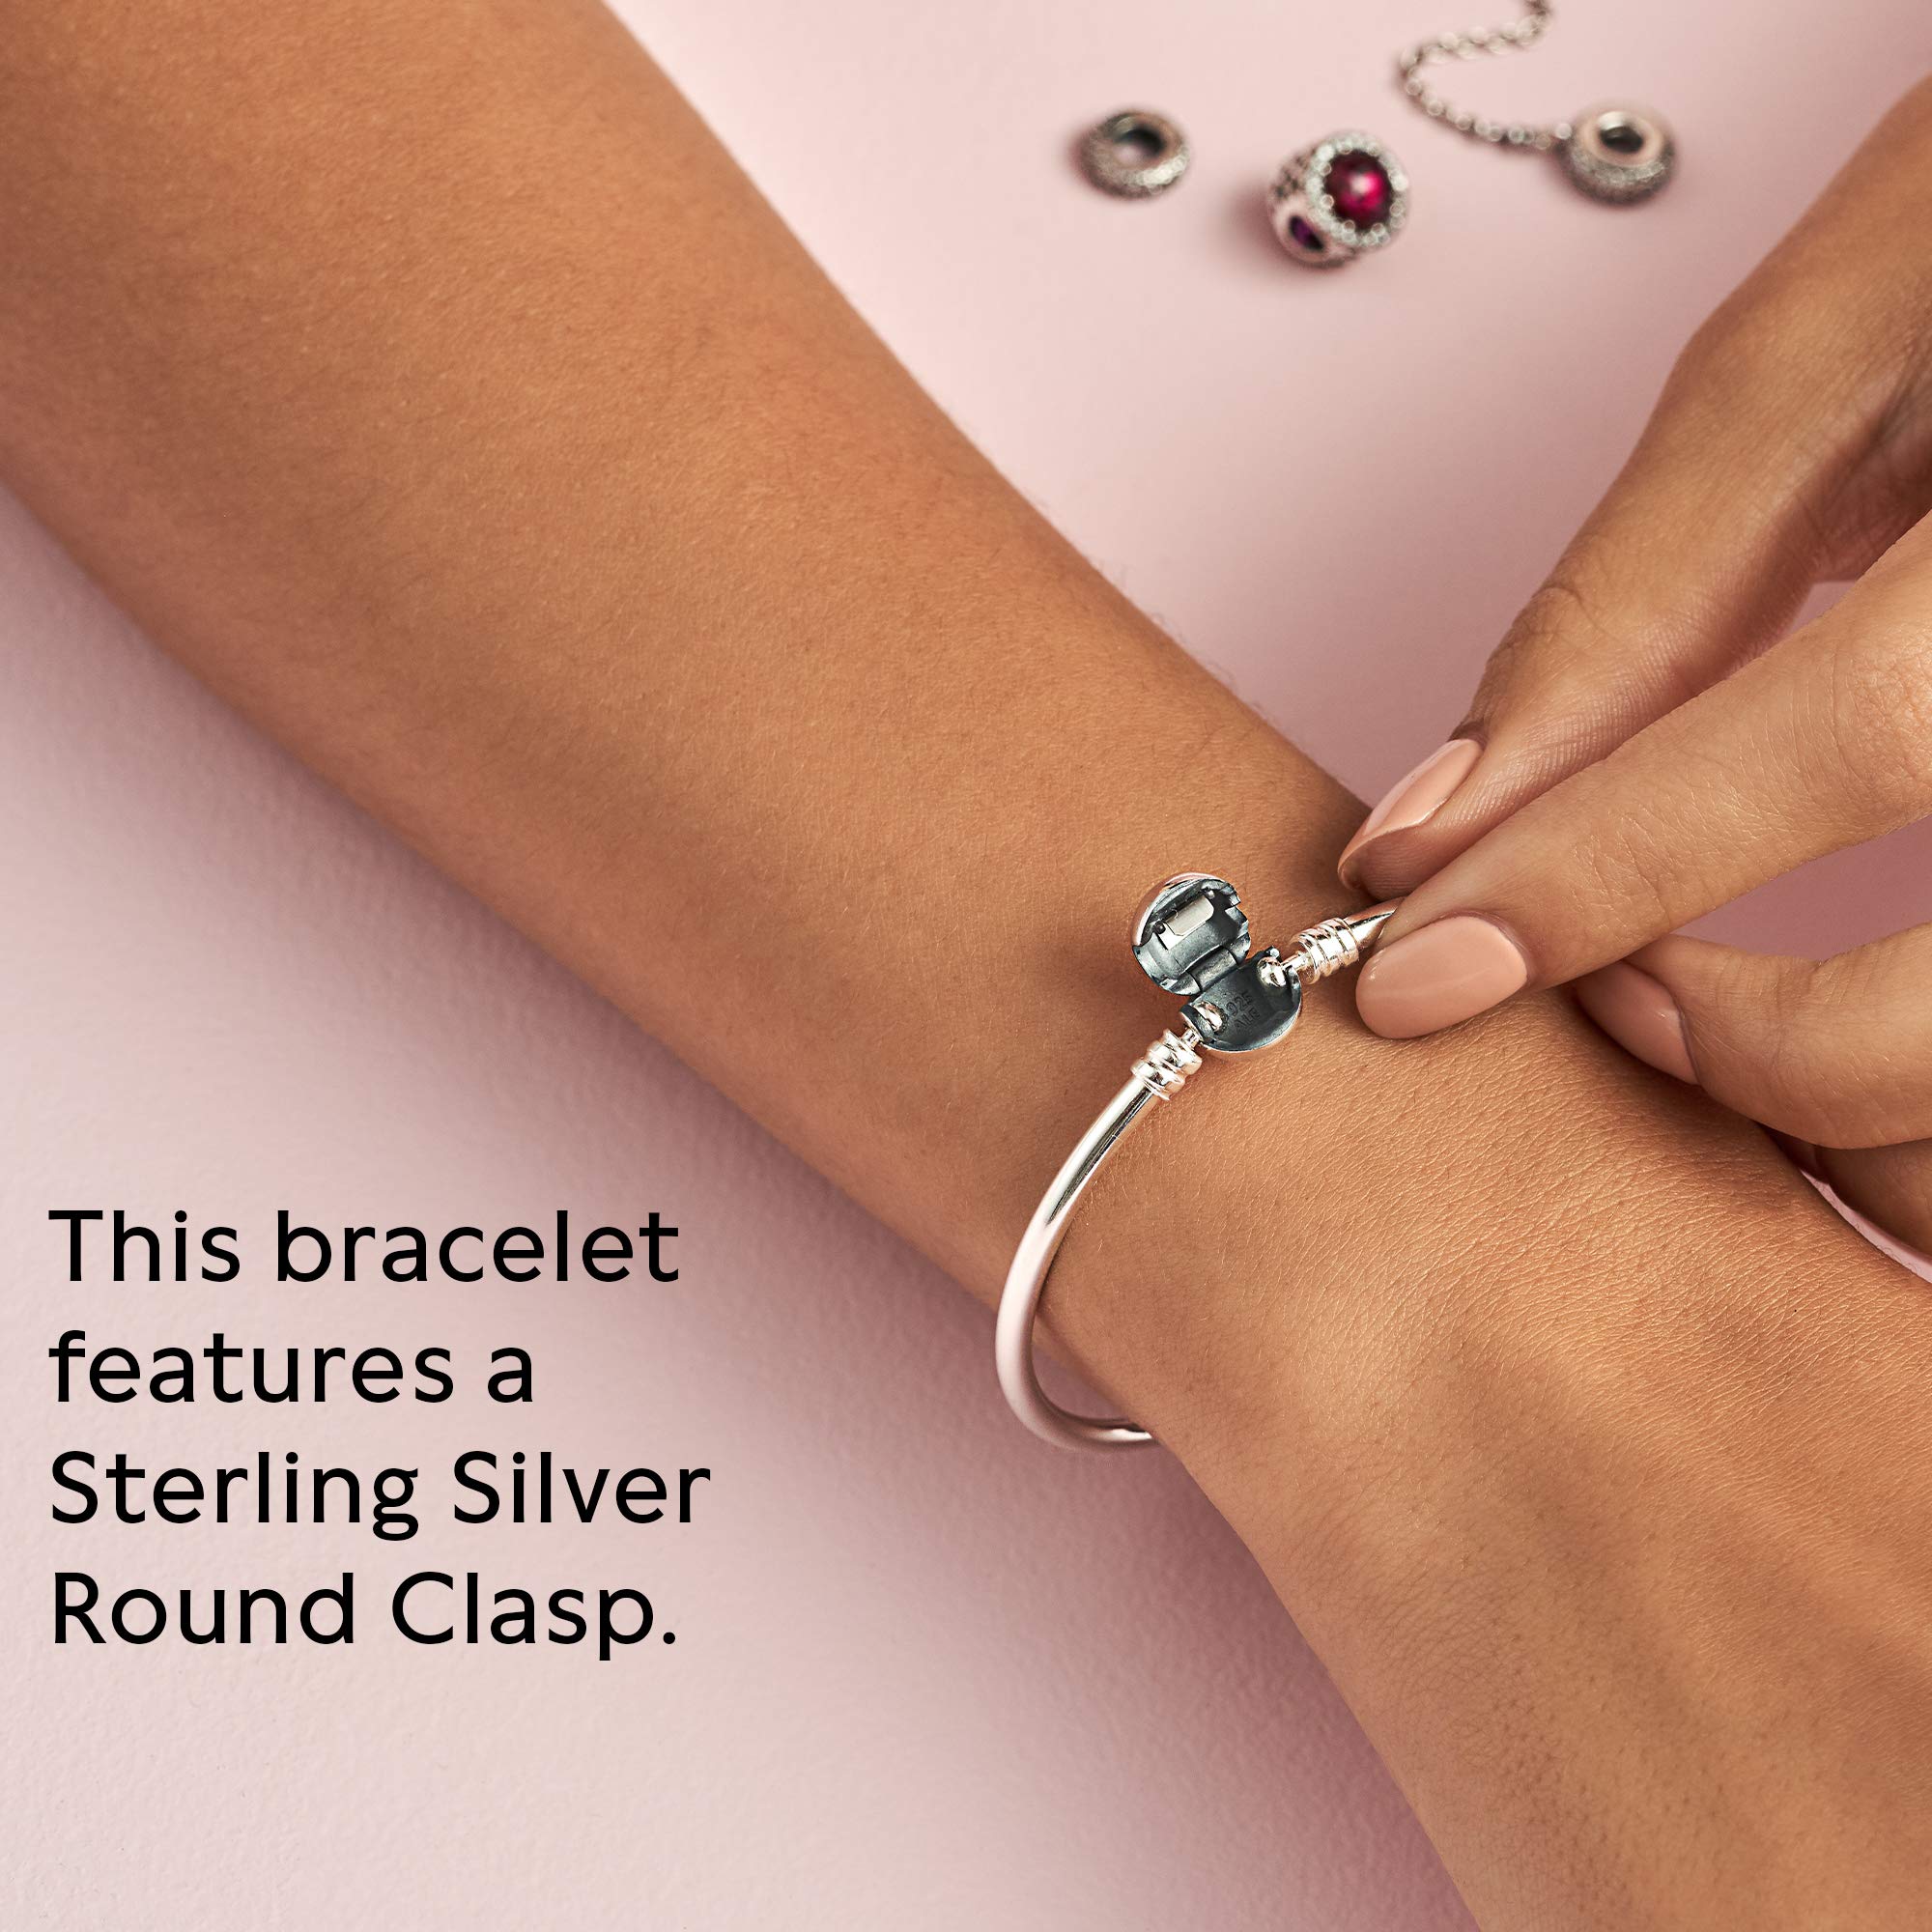 PANDORA Jewelry Bangle Charm Sterling Silver Bracelet, 7.5